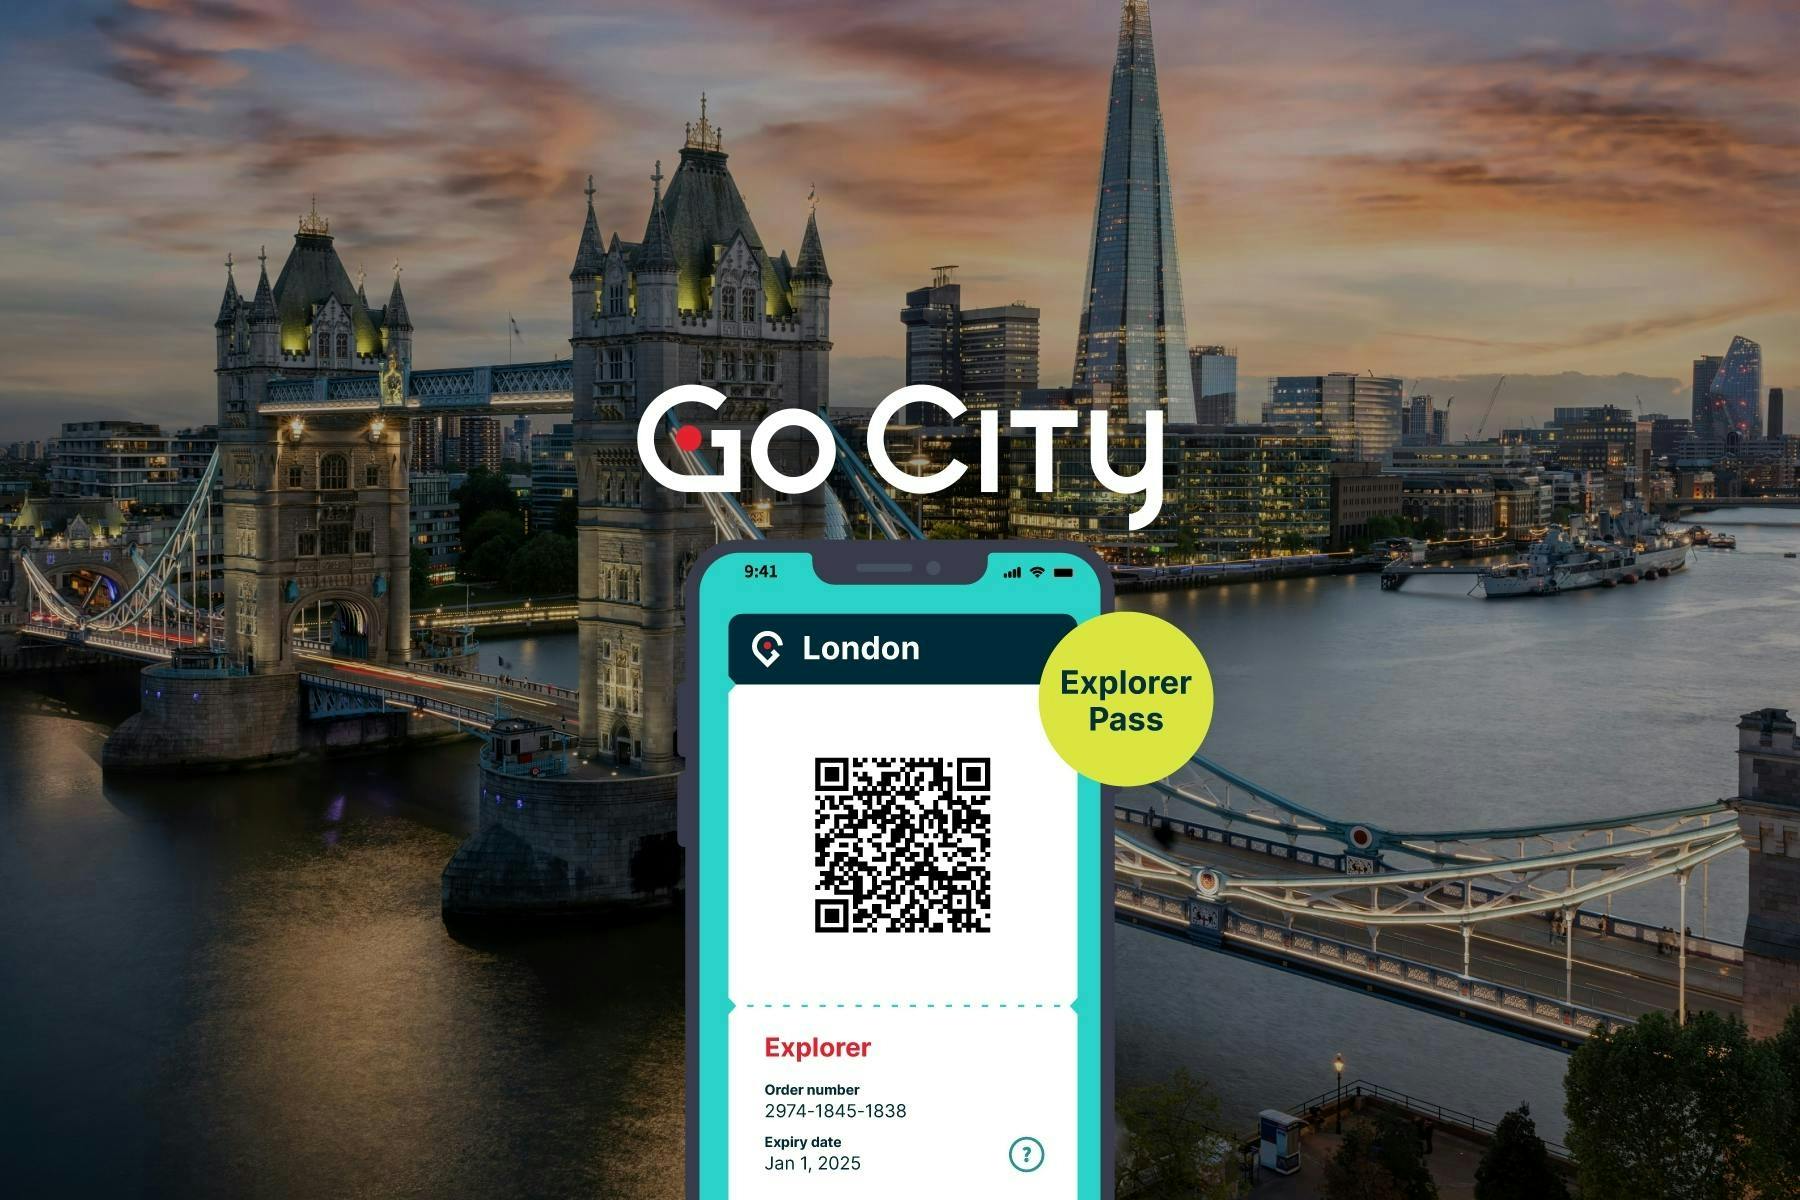 Go City | London Explorer Pass including London Eye